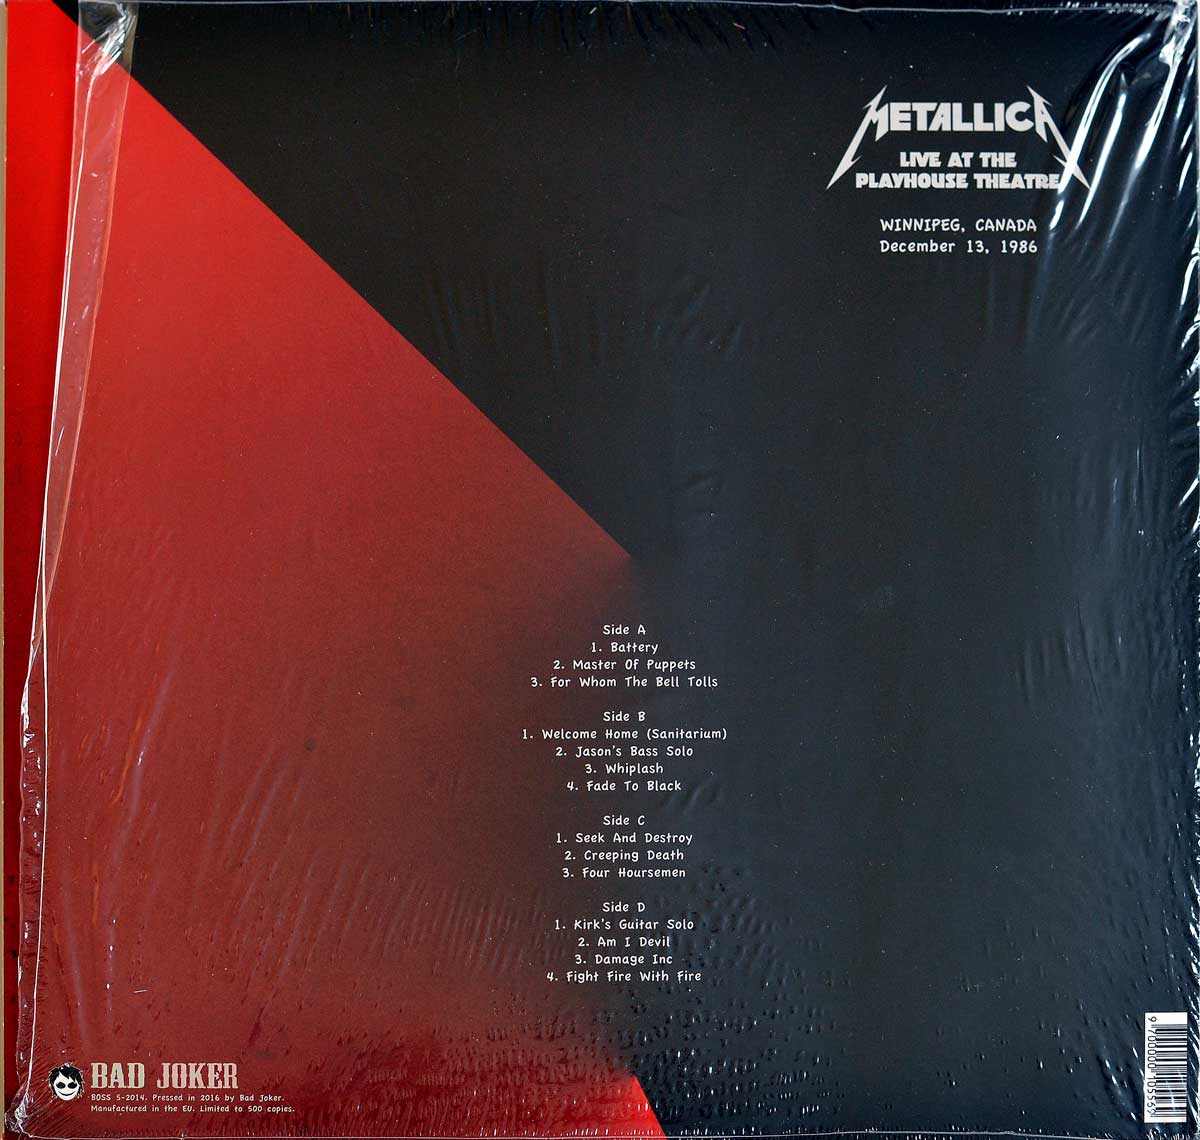 Photo of album back cover METALLICA - Live at the Playhouse Theatre Winnipeg 1986 